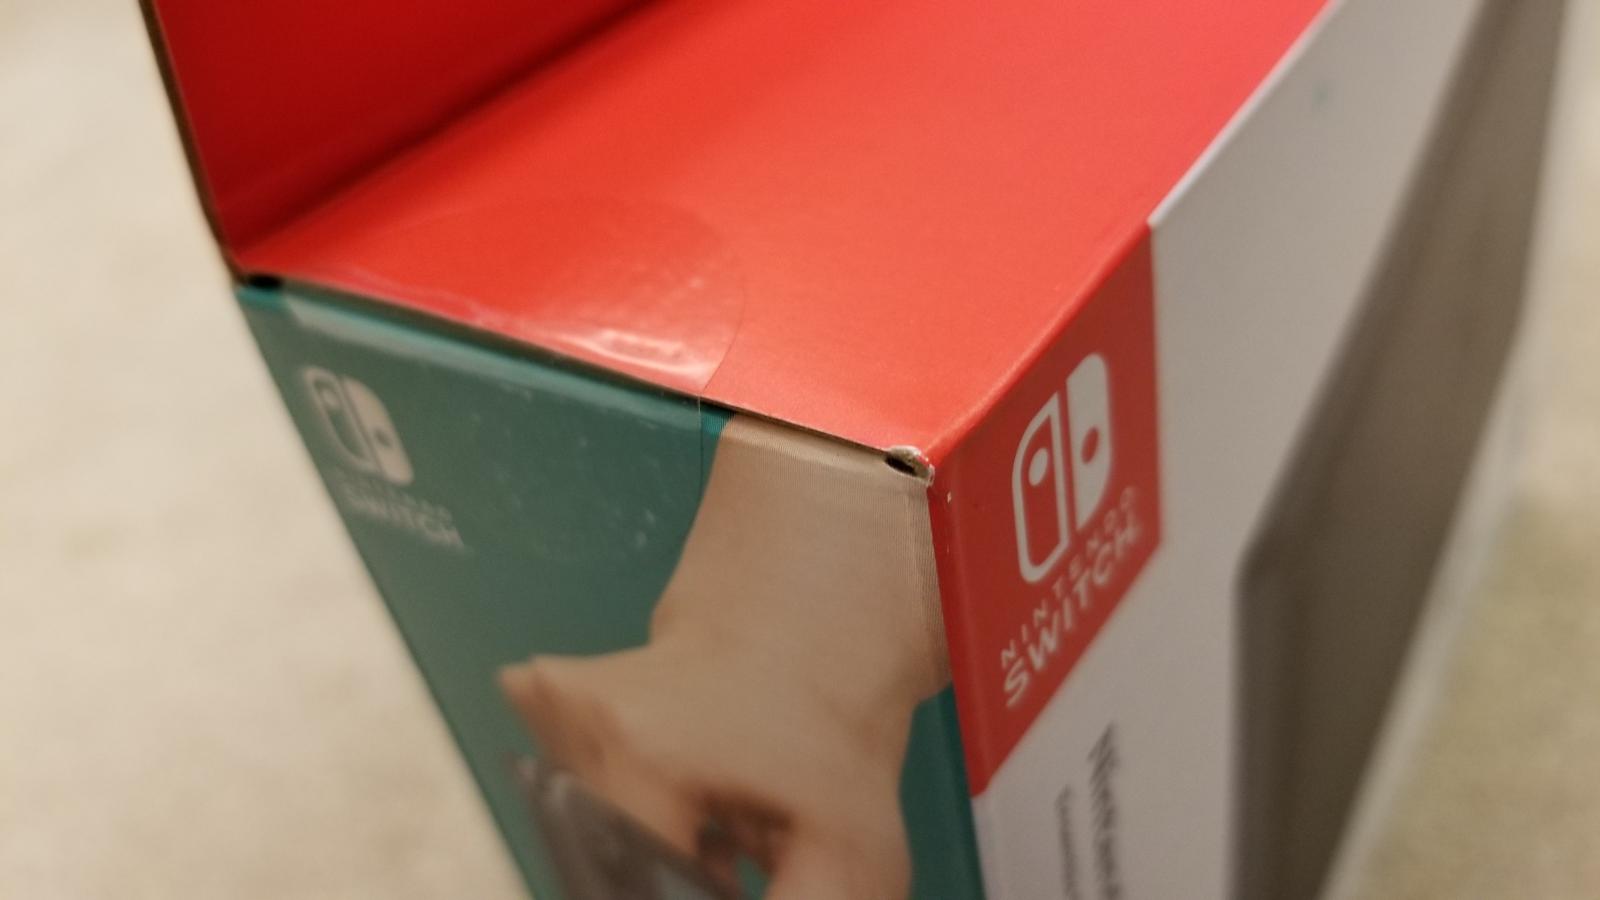 For sale Nintendo Switch Dock Set (BNIB, sealed)